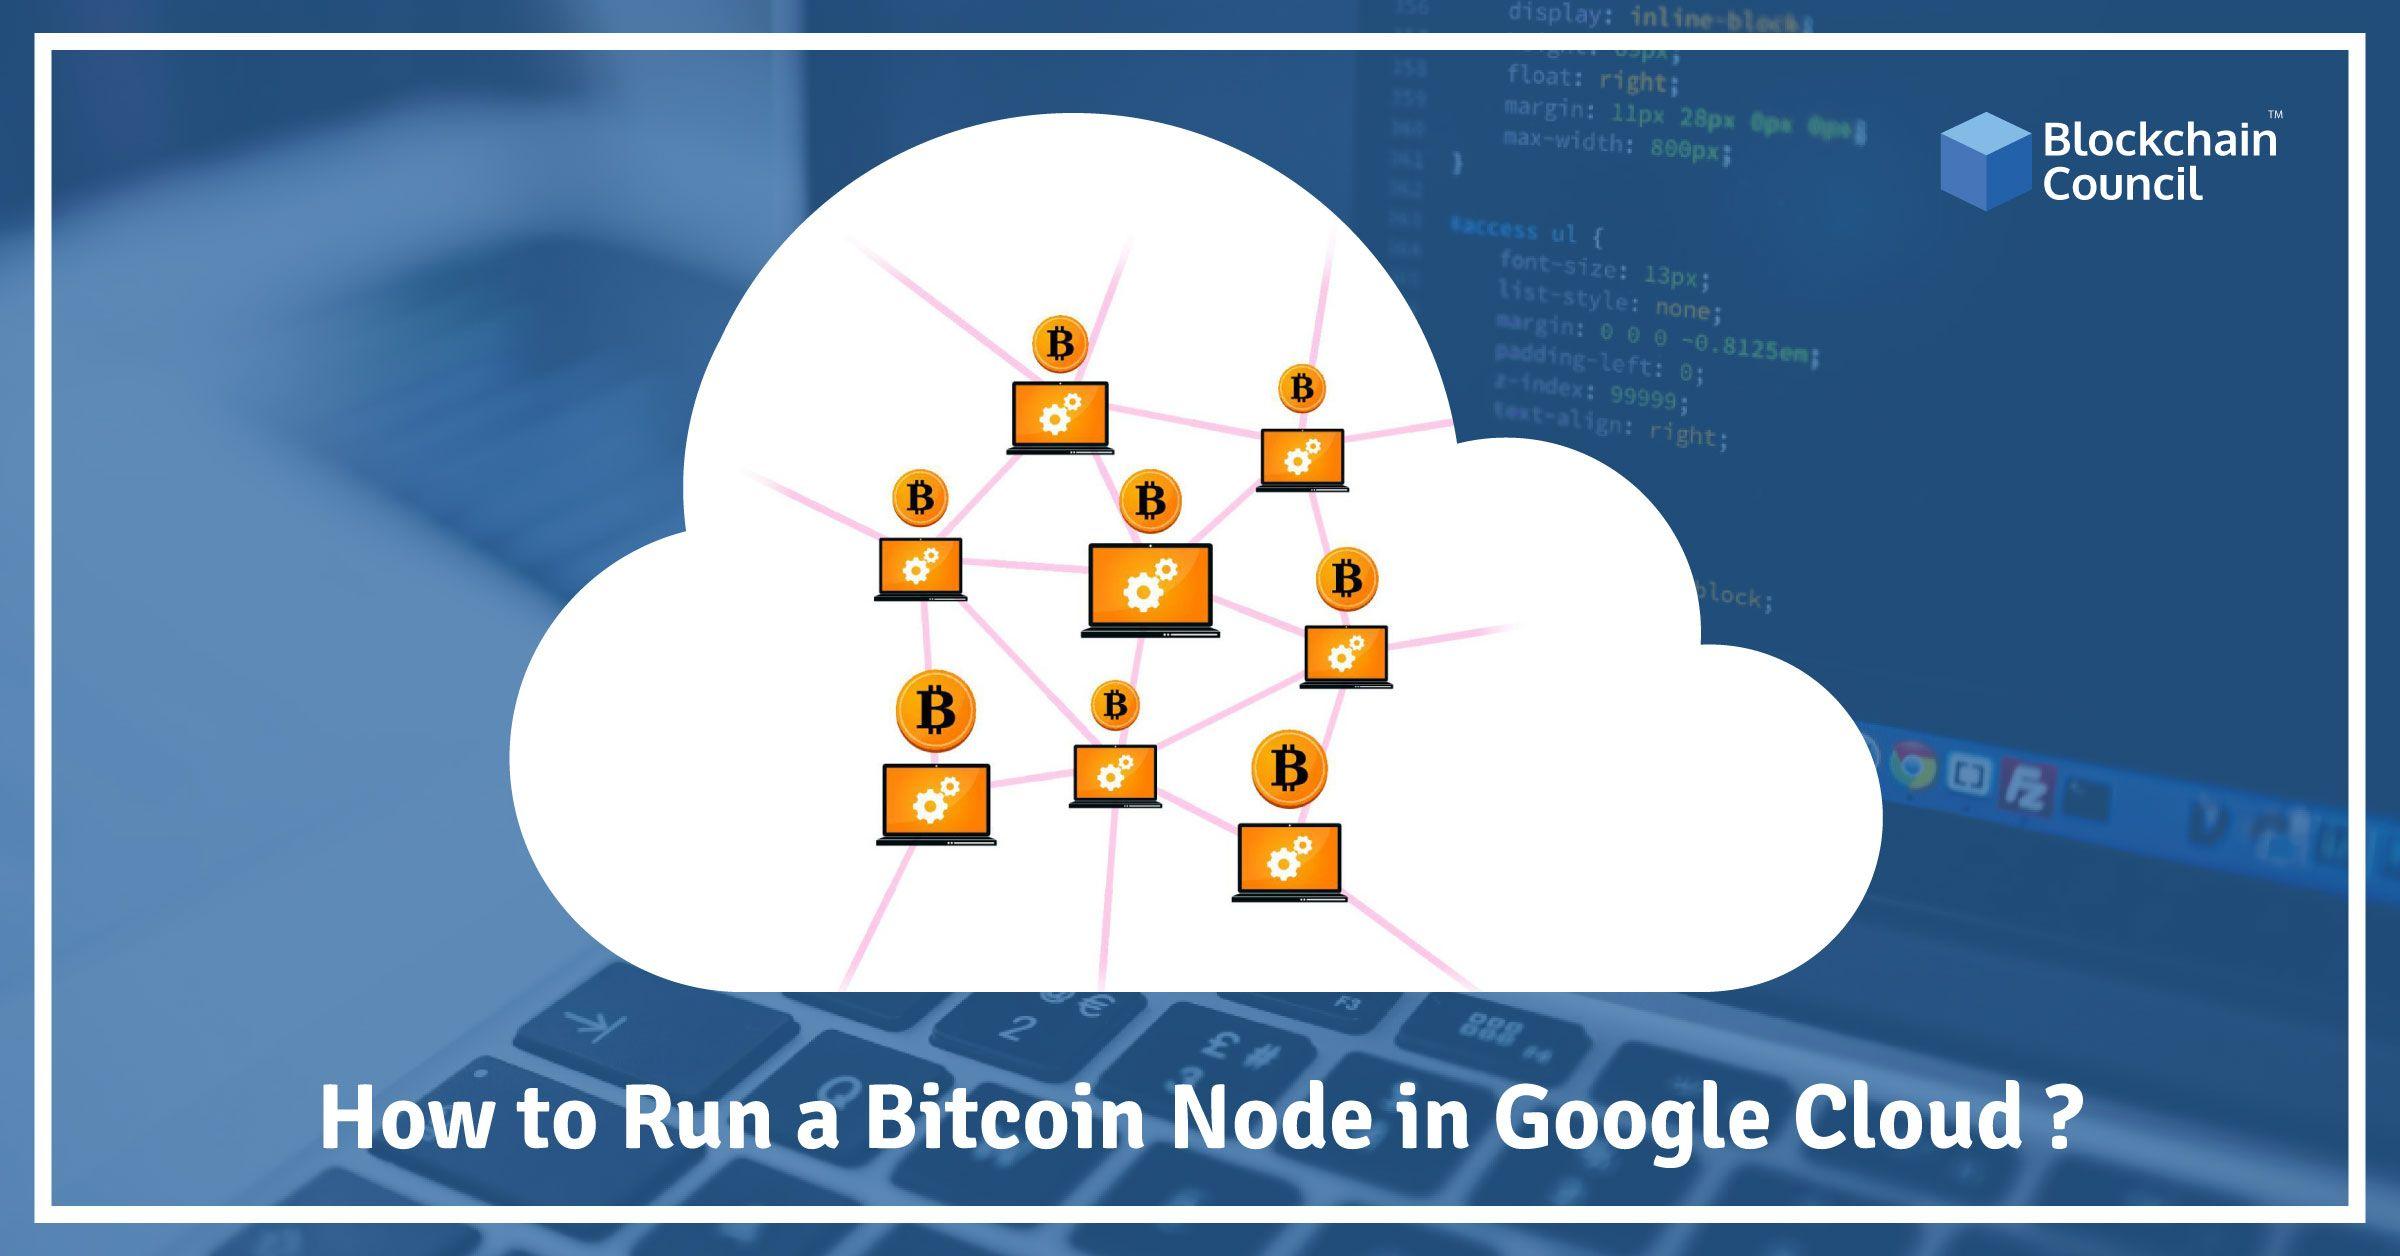 Blockchain Cloud Logo - How To Run a Bitcoin Node in Google Cloud?